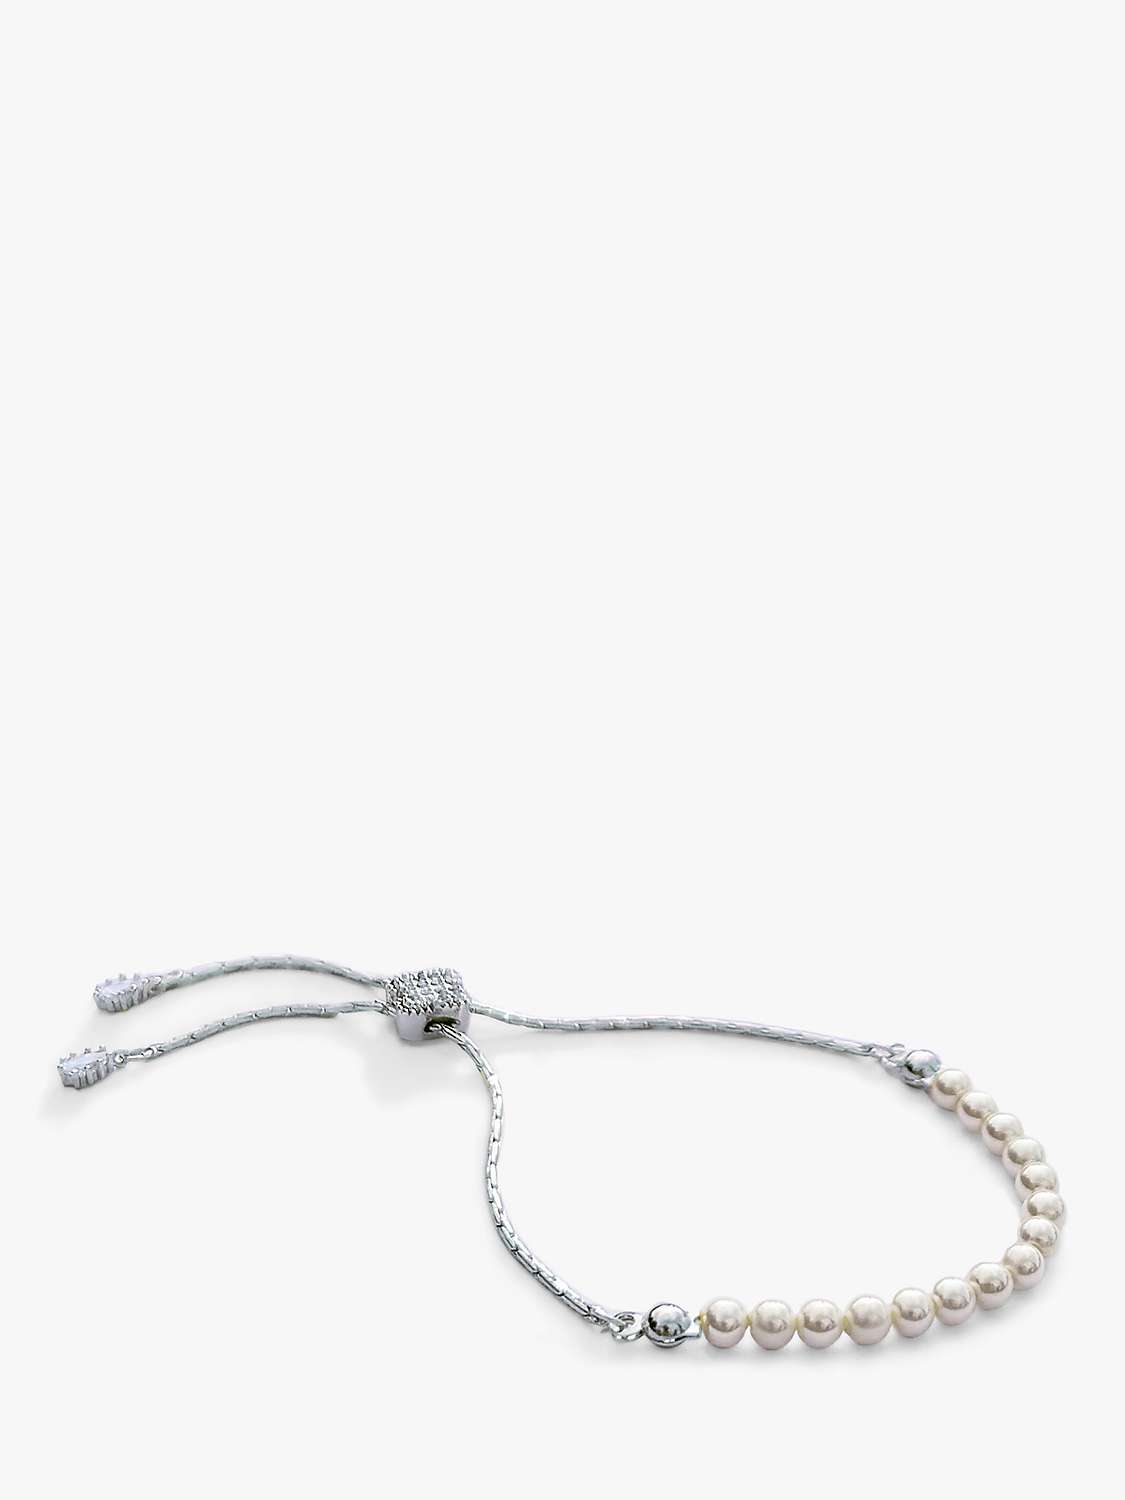 Buy Ivory & Co. Carlisle Faux Pearl Beaded Bracelet Online at johnlewis.com